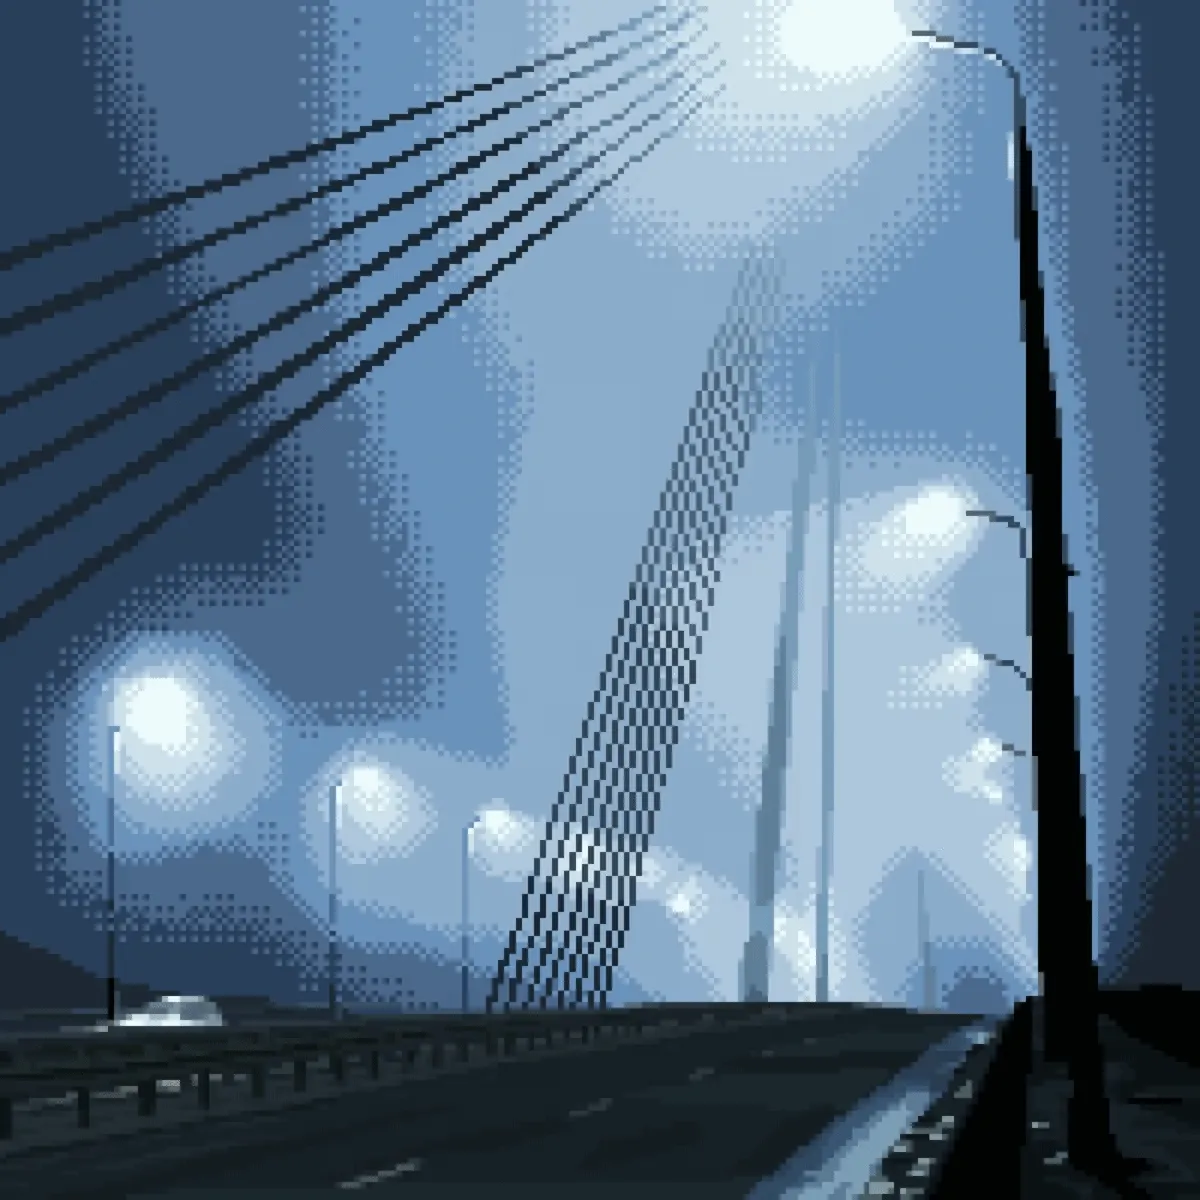 The bridge in the fog